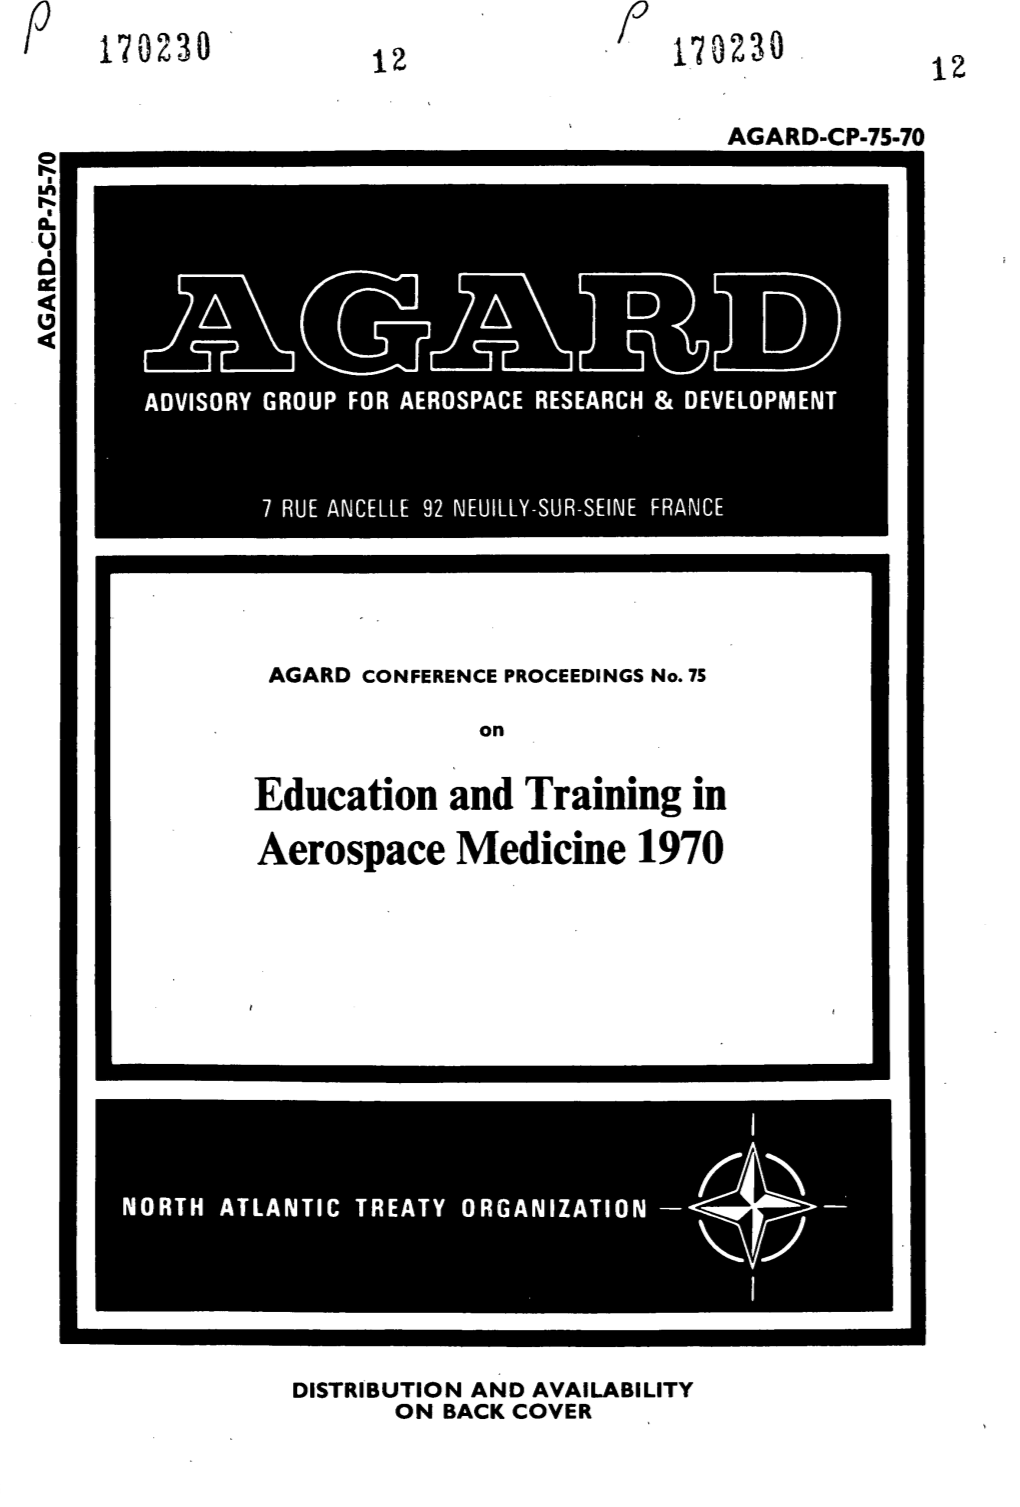 Education and Training in Aerospace Medicine 1970